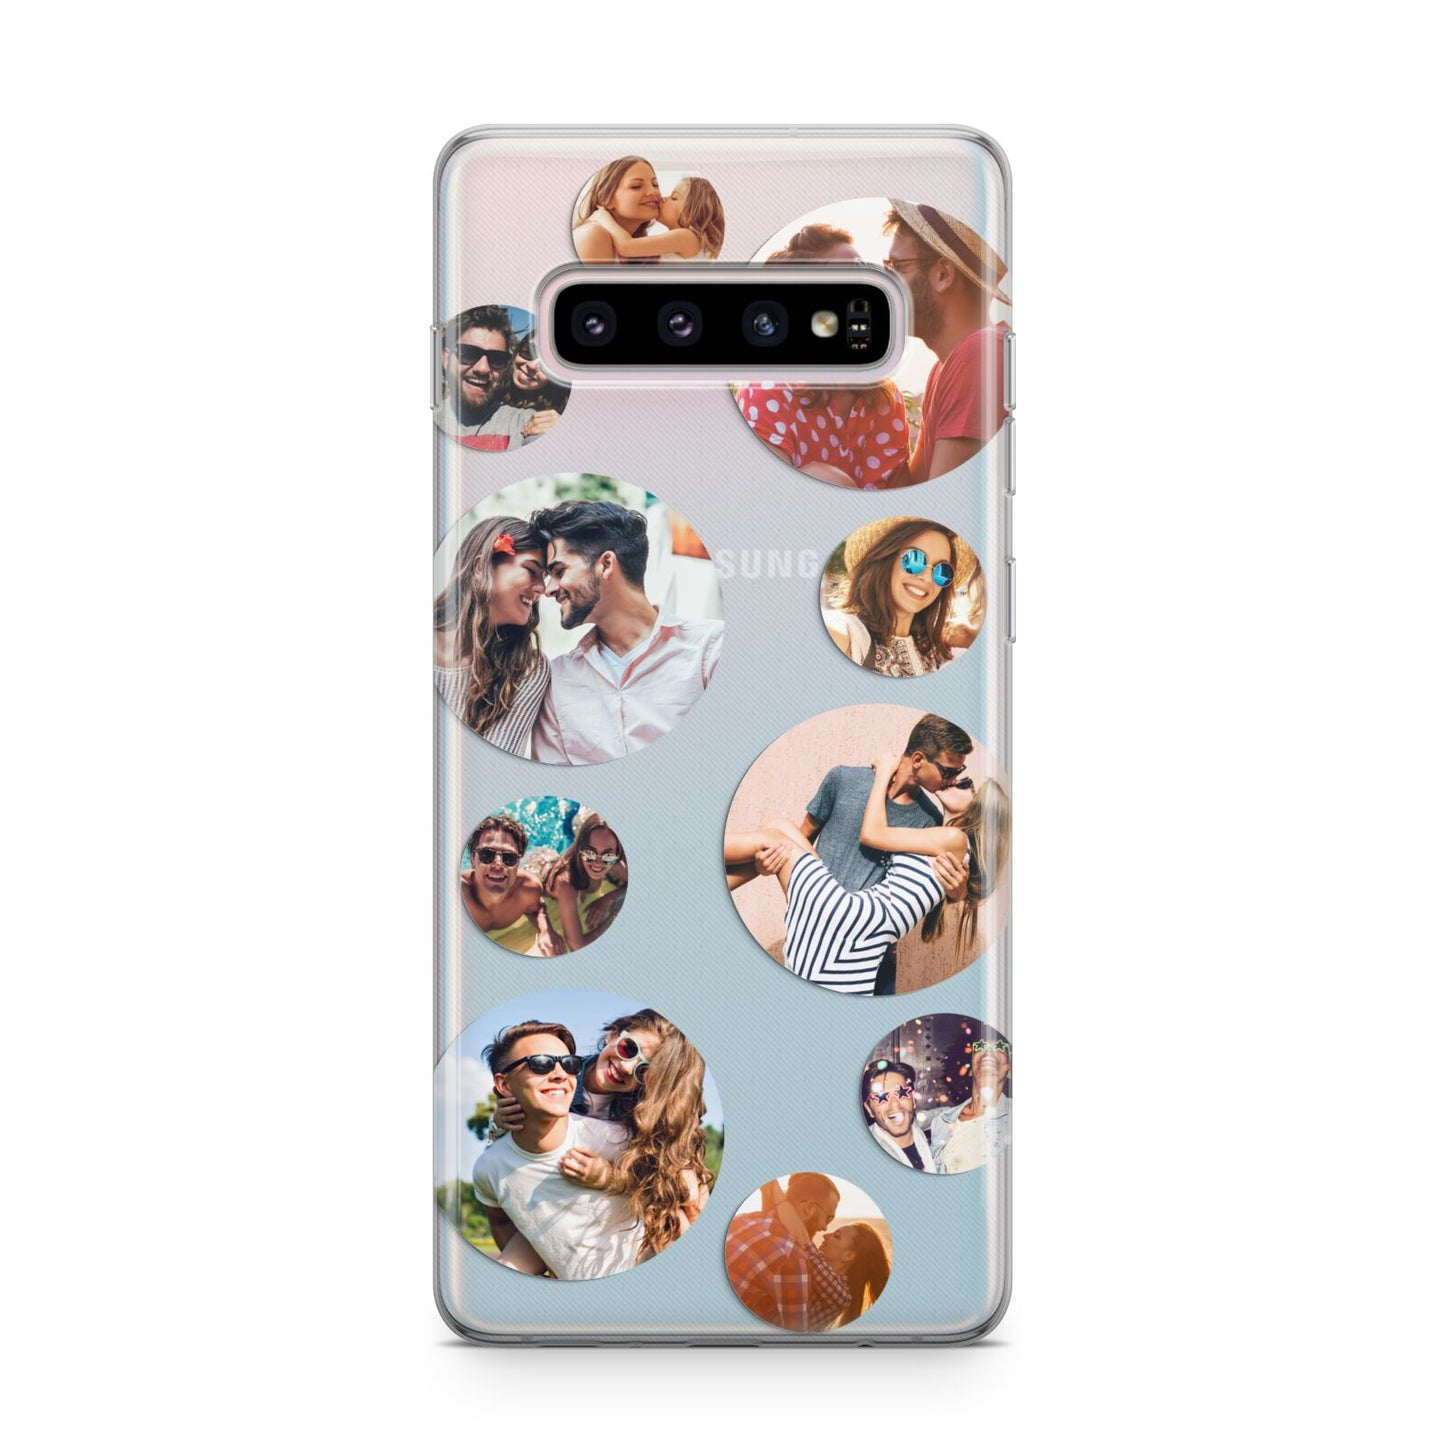 Multi Circular Photo Collage Upload Samsung Galaxy S10 Plus Case